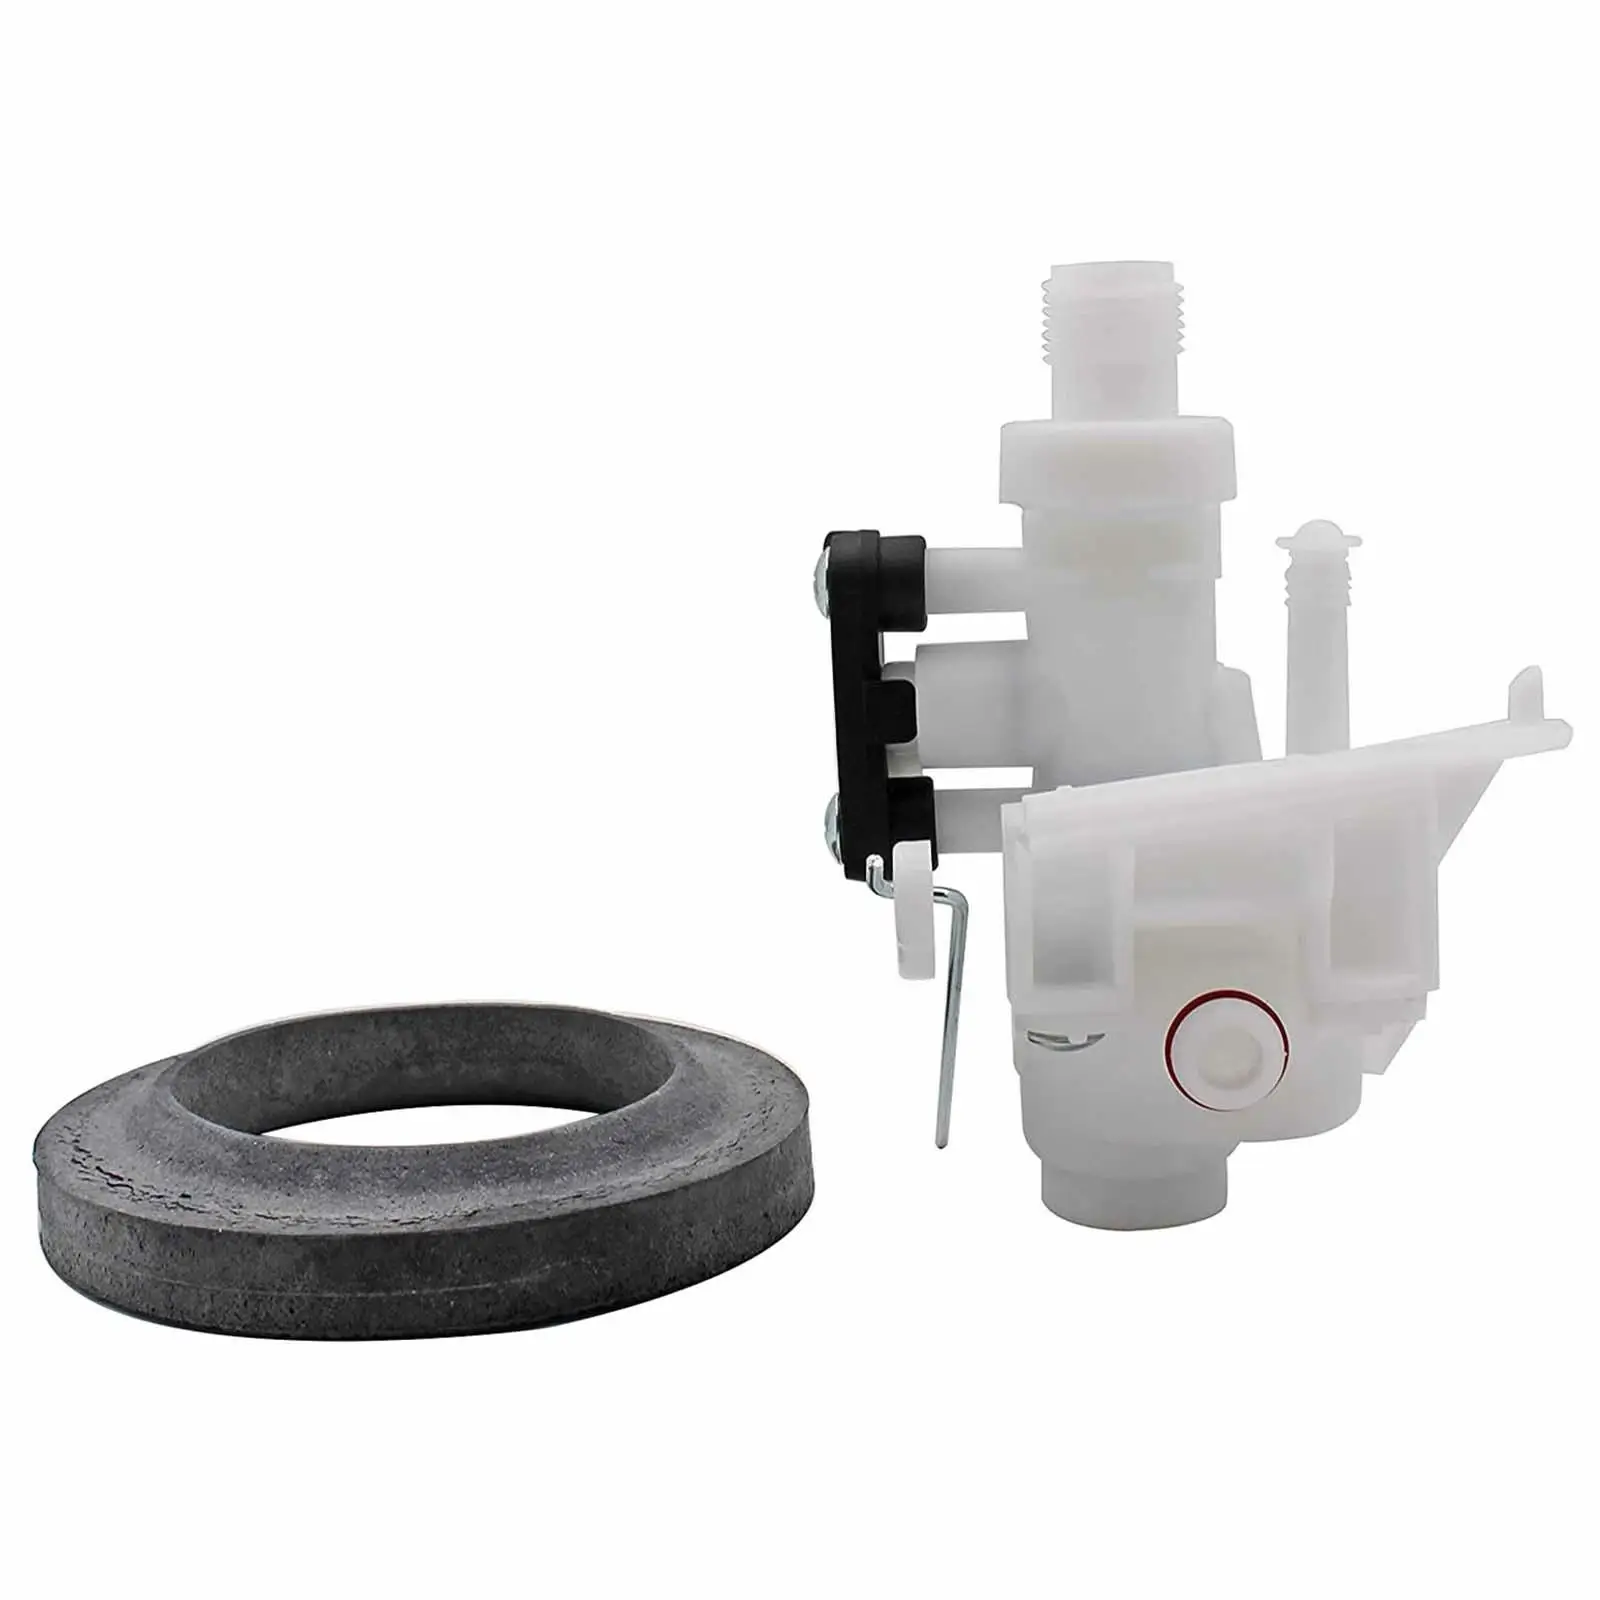 31705 Water Valve with Seal, Camper Trailer Toilet Repair Kits, Practical